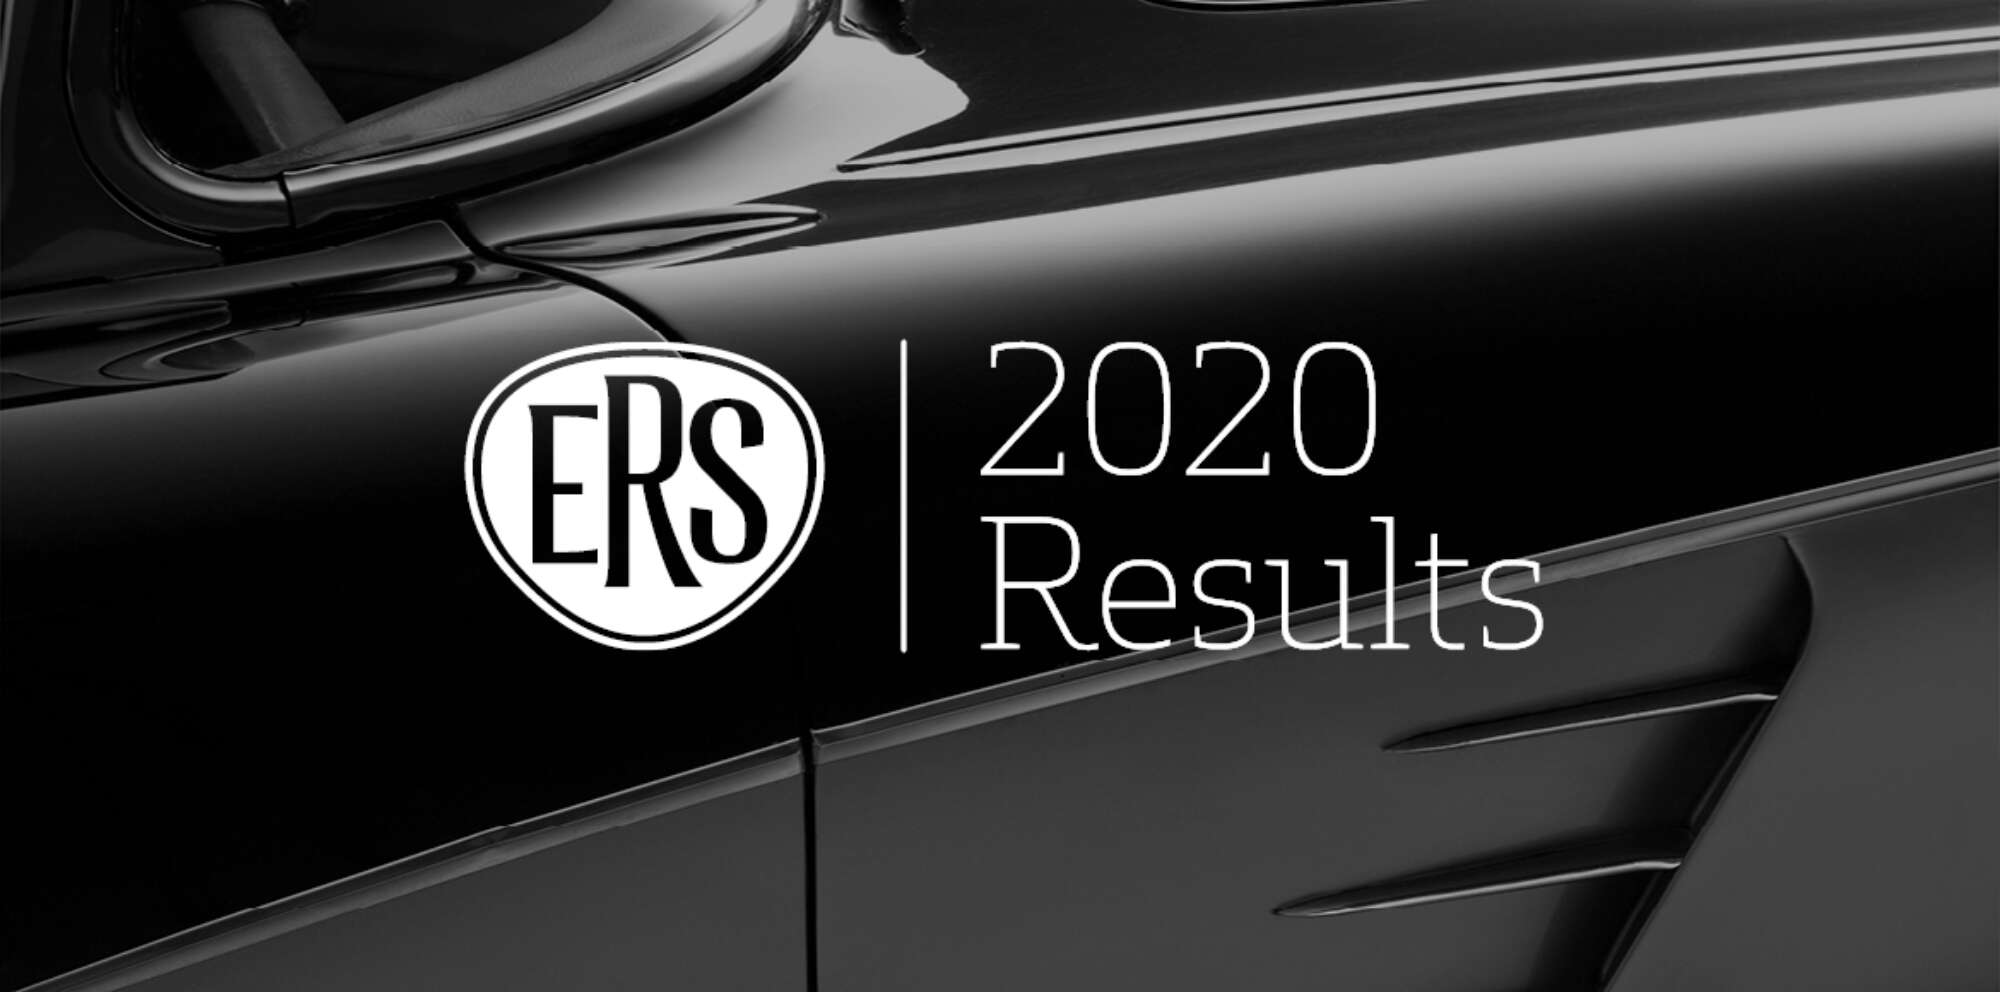 2020 Results Bl